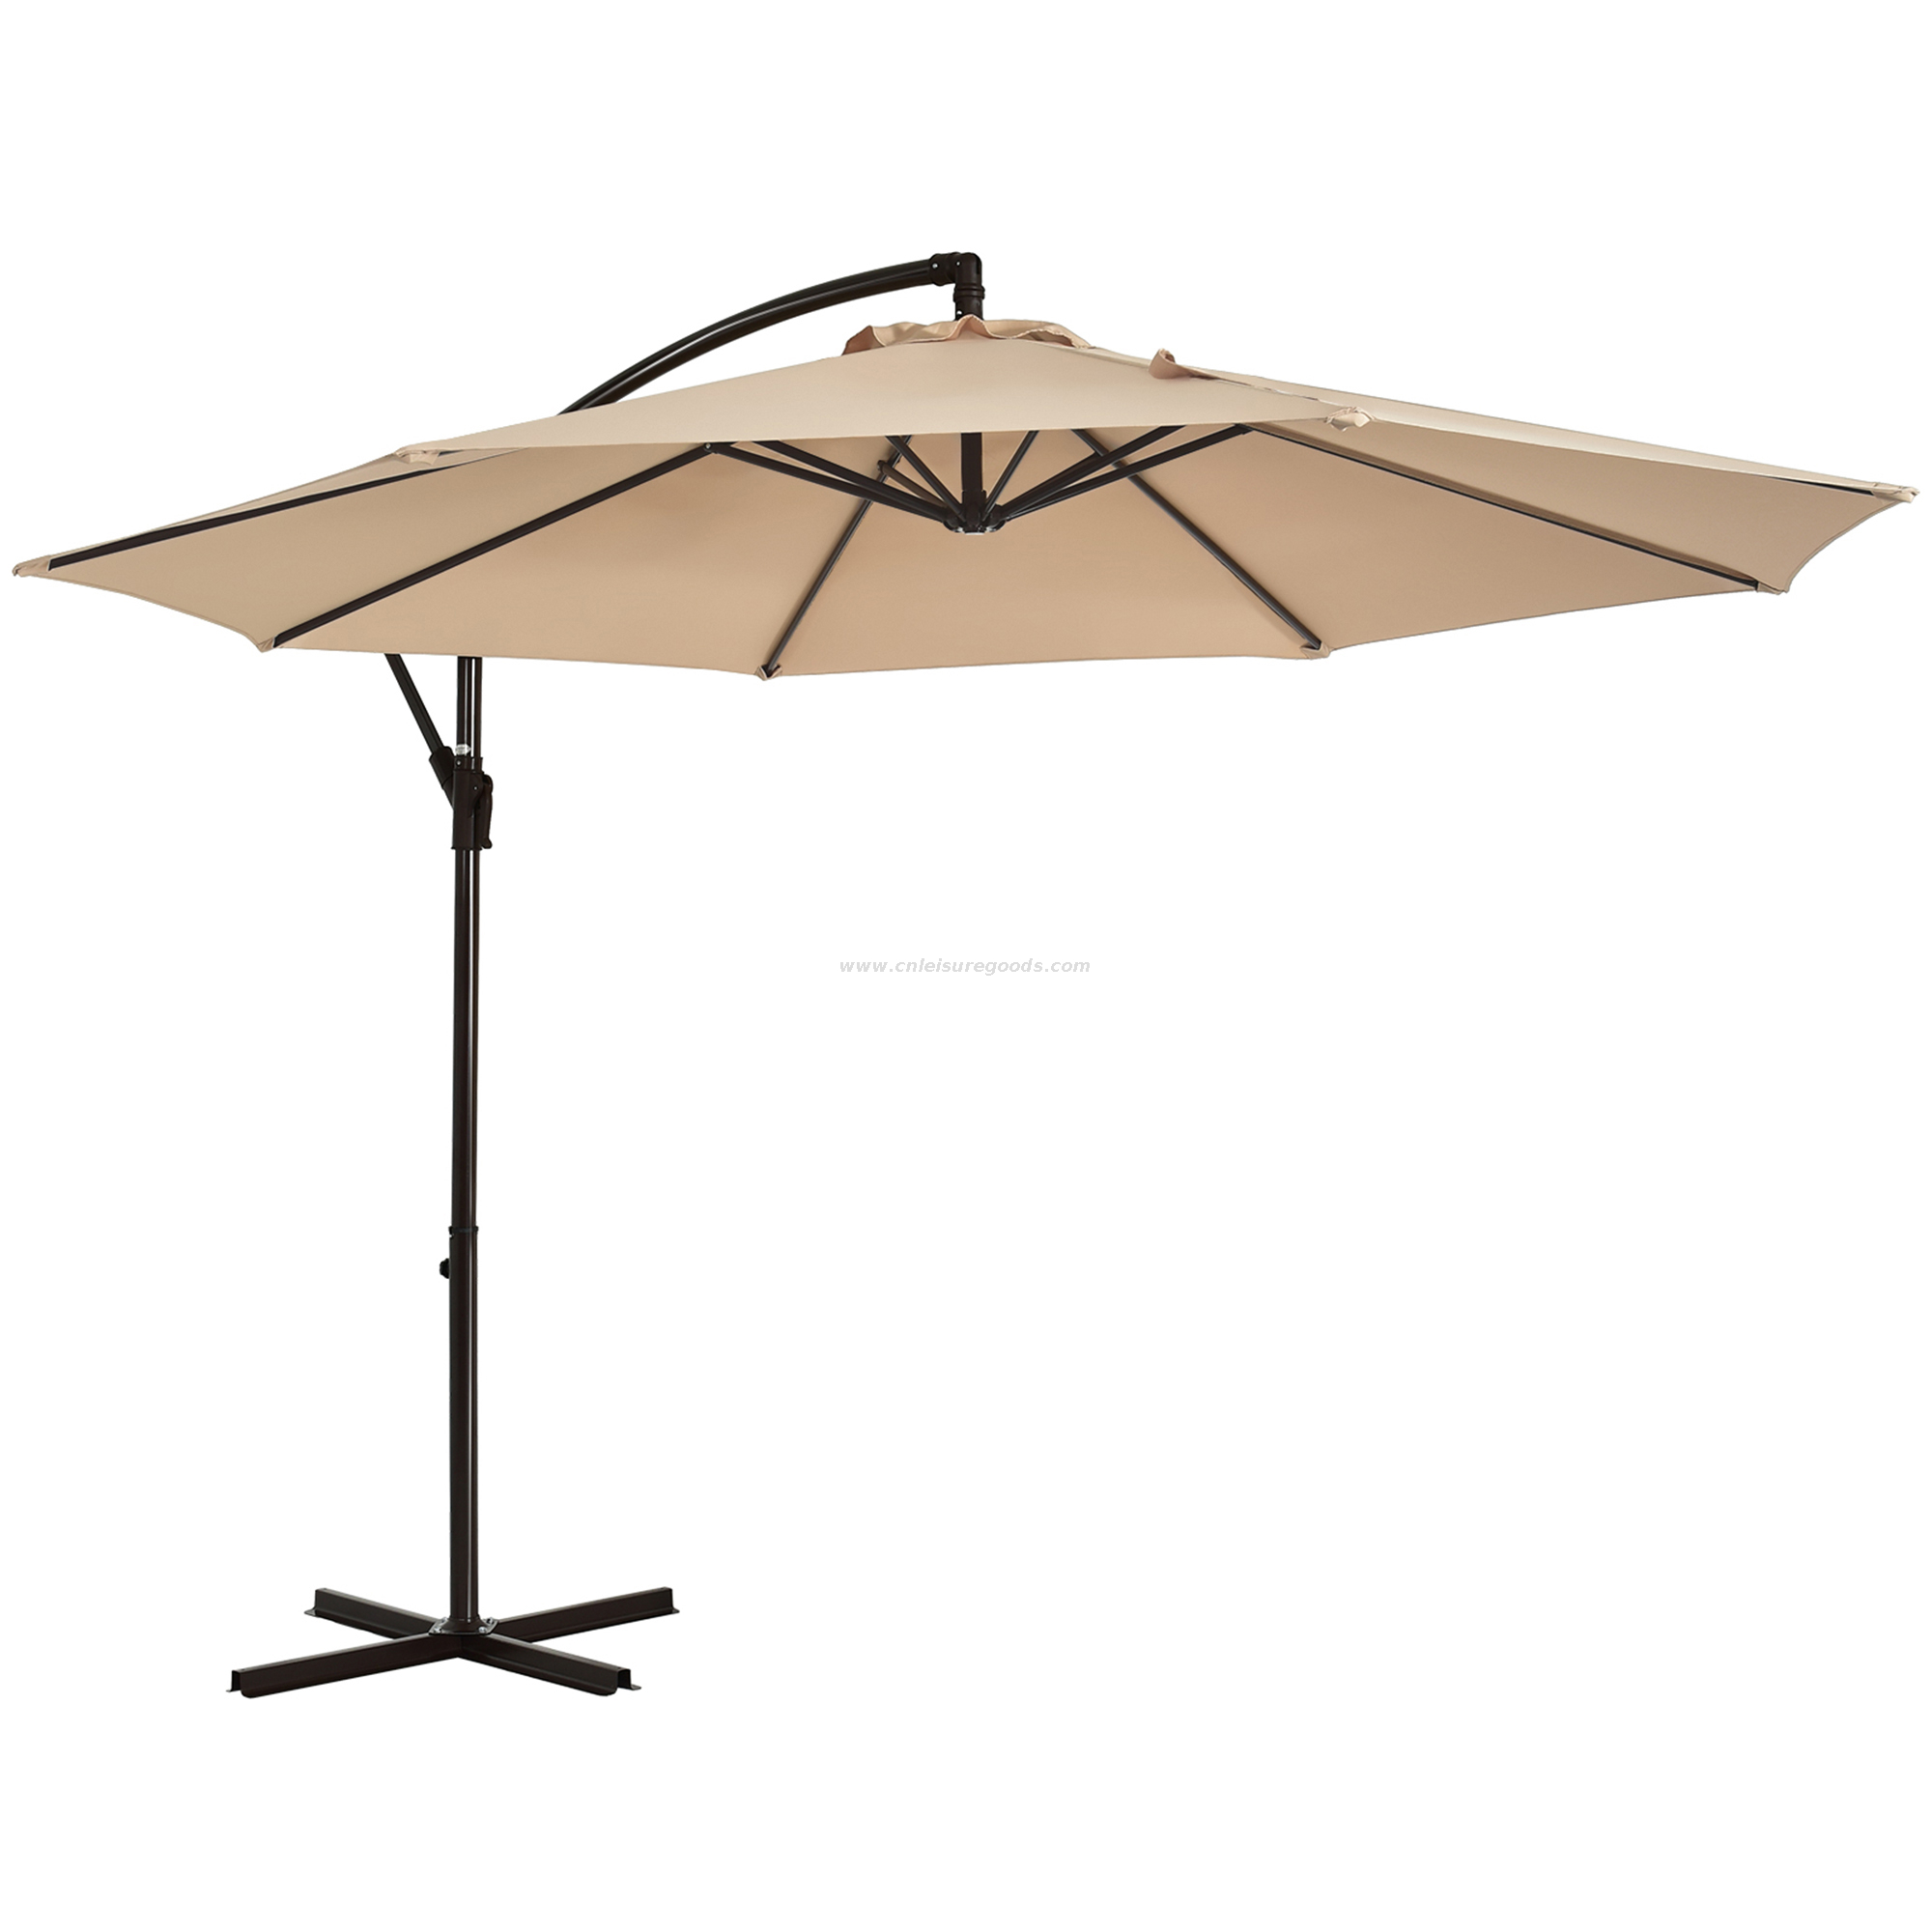 Uplion 10FT Garden Waterproof Cantilever Outdoor Umbrellas Offset Hanging Parasols Patio Umbrella